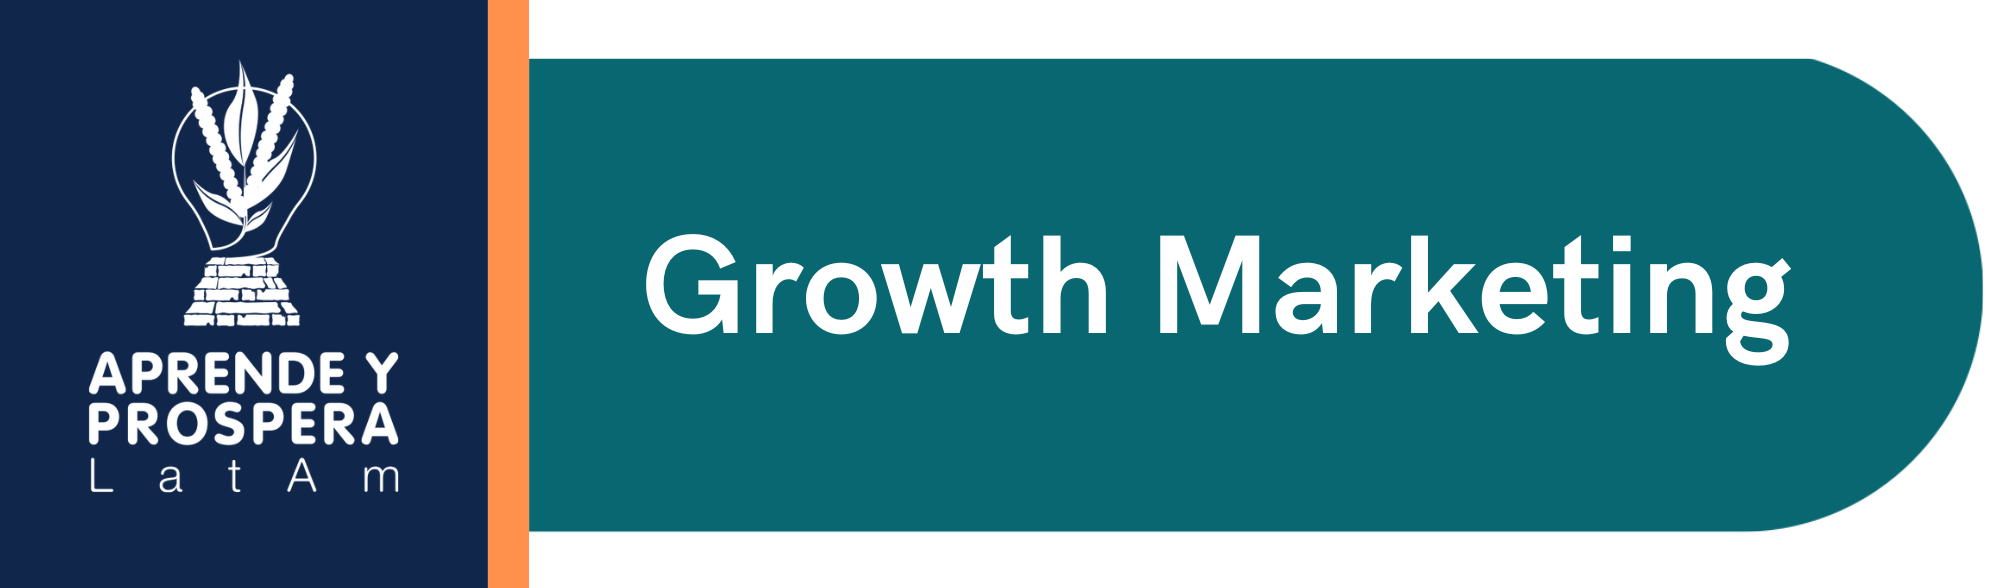 1. Growth Marketing